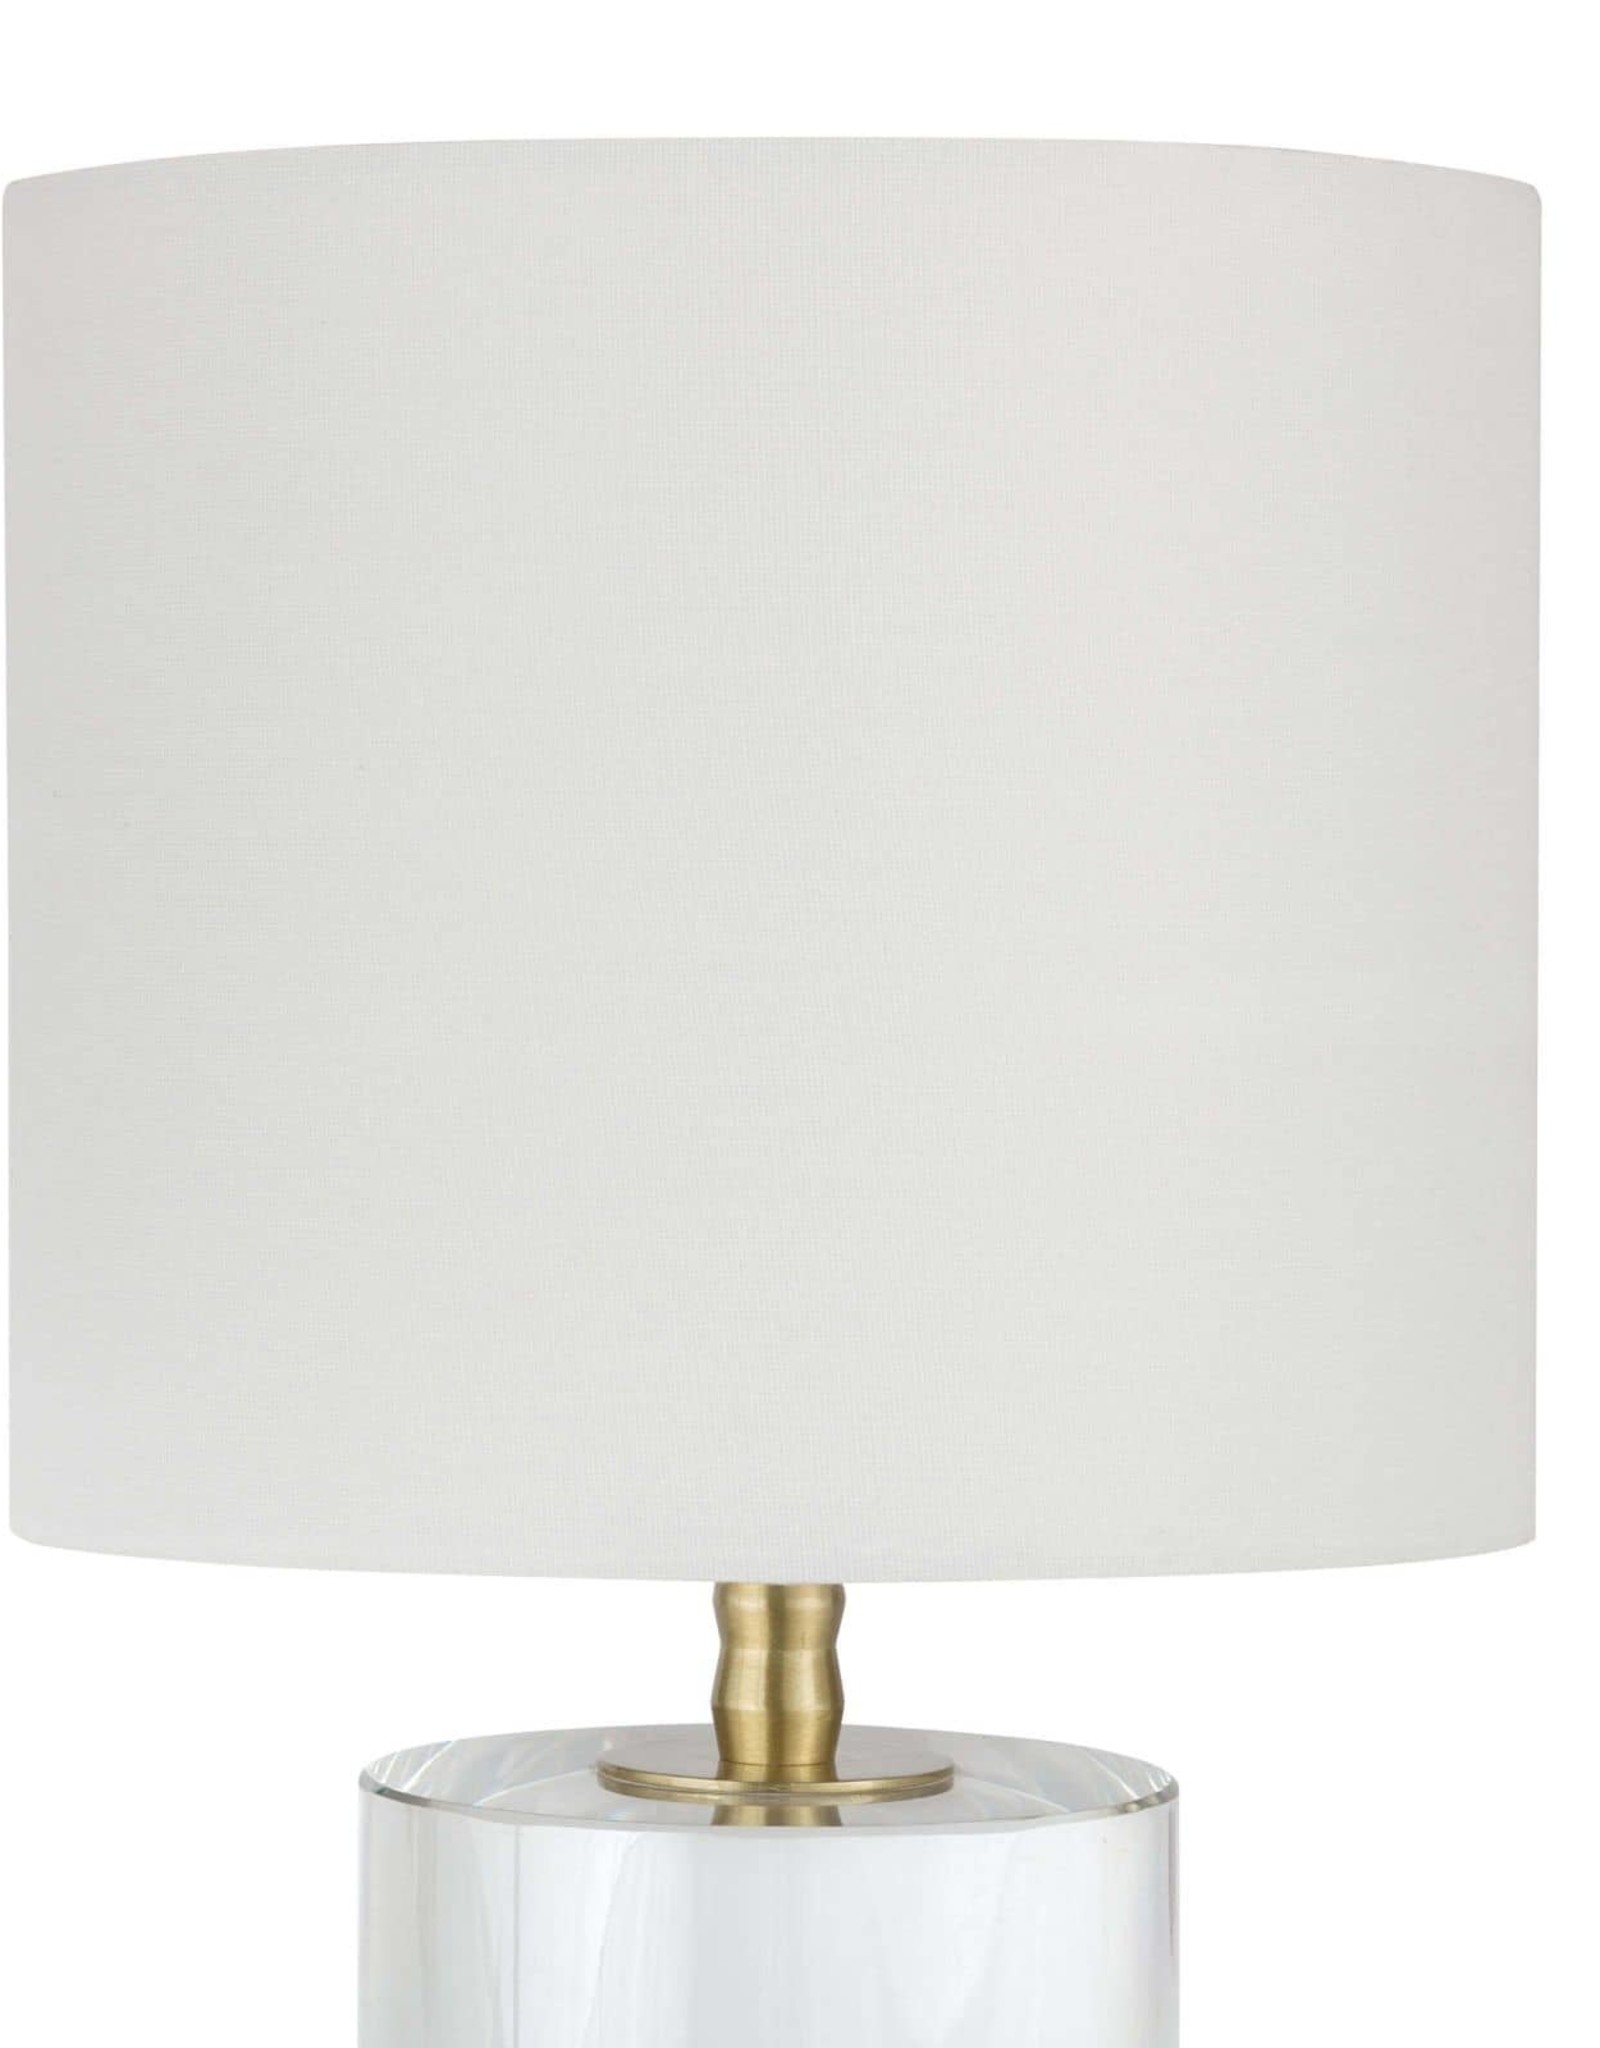 Regina Andrew Design Juliet Crystal Table Lamp Small